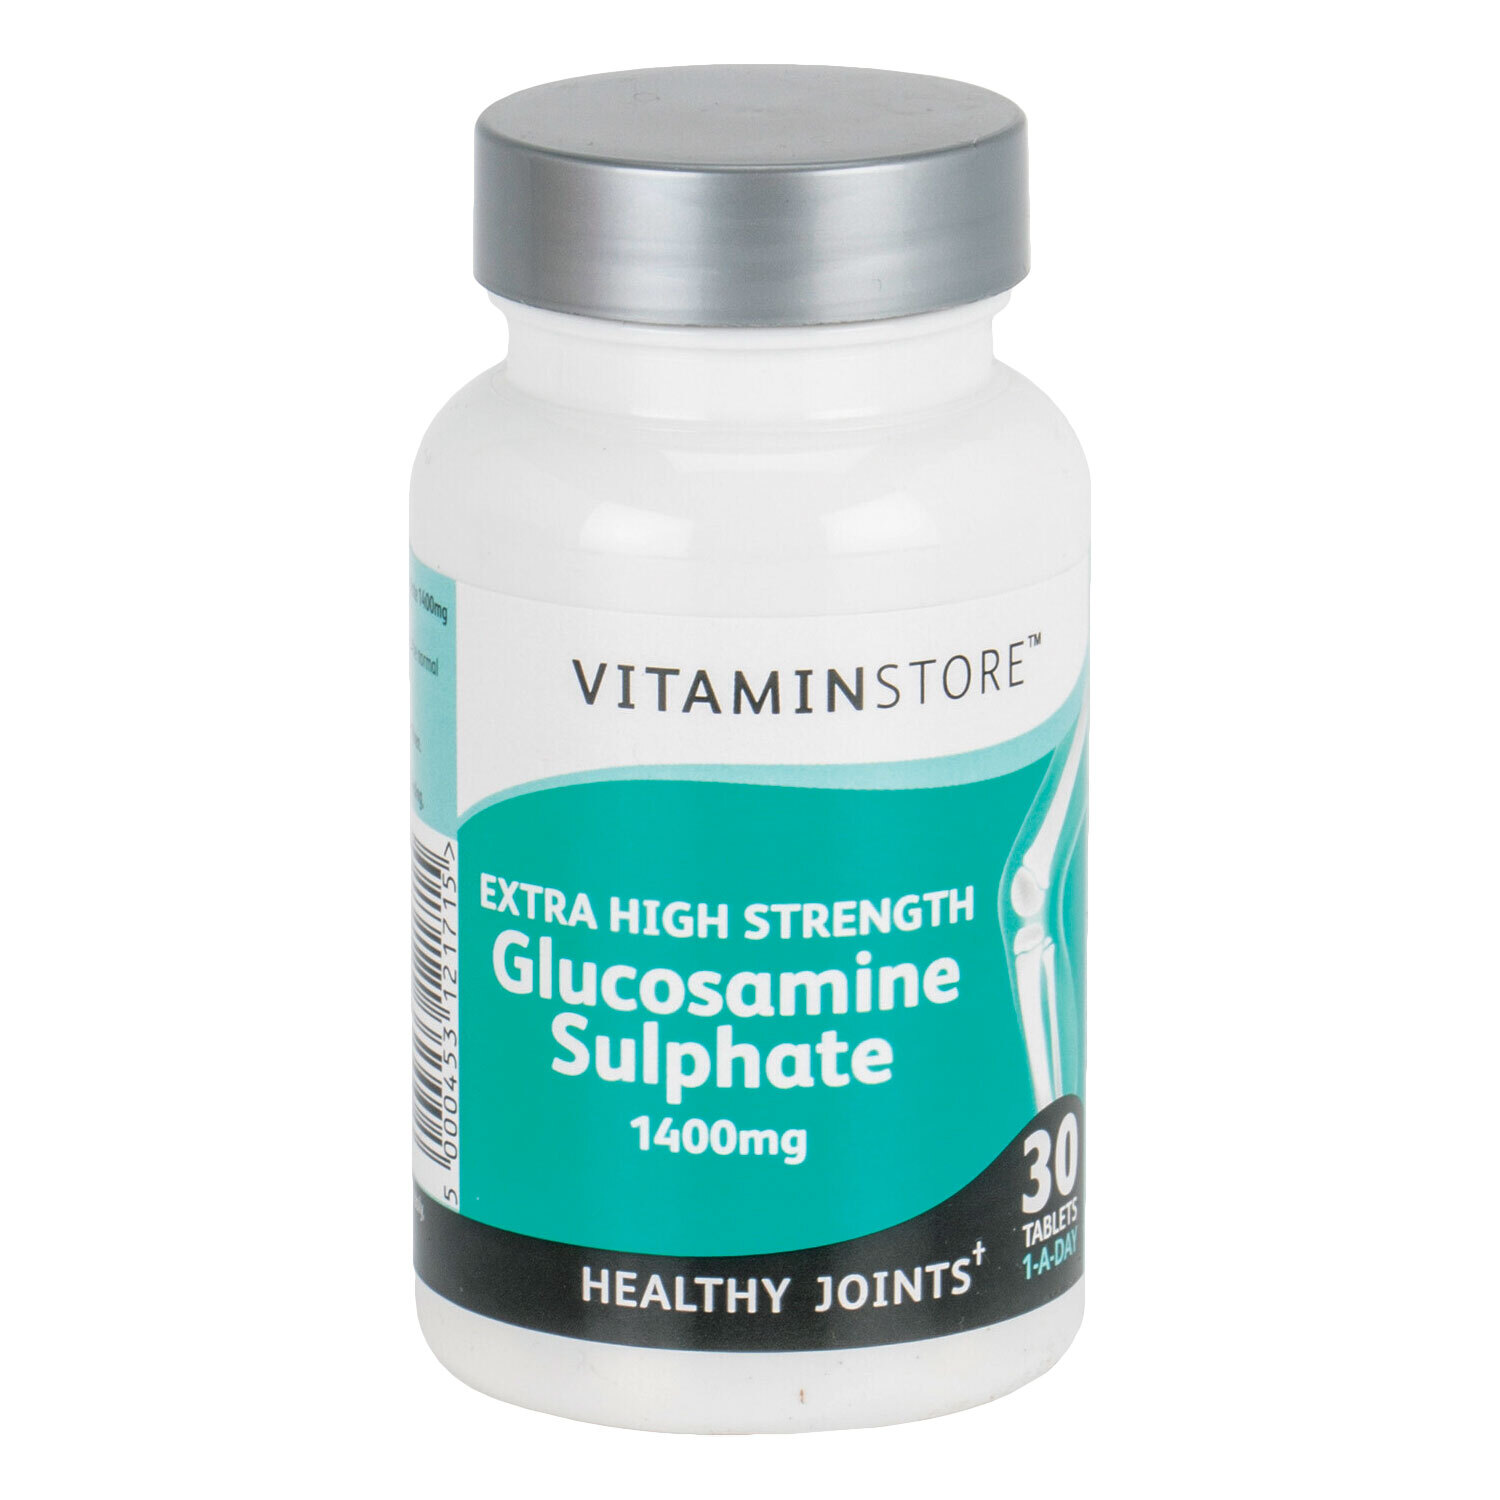 Extra High Strength Glucosamine Sulphate - 1400mg Image